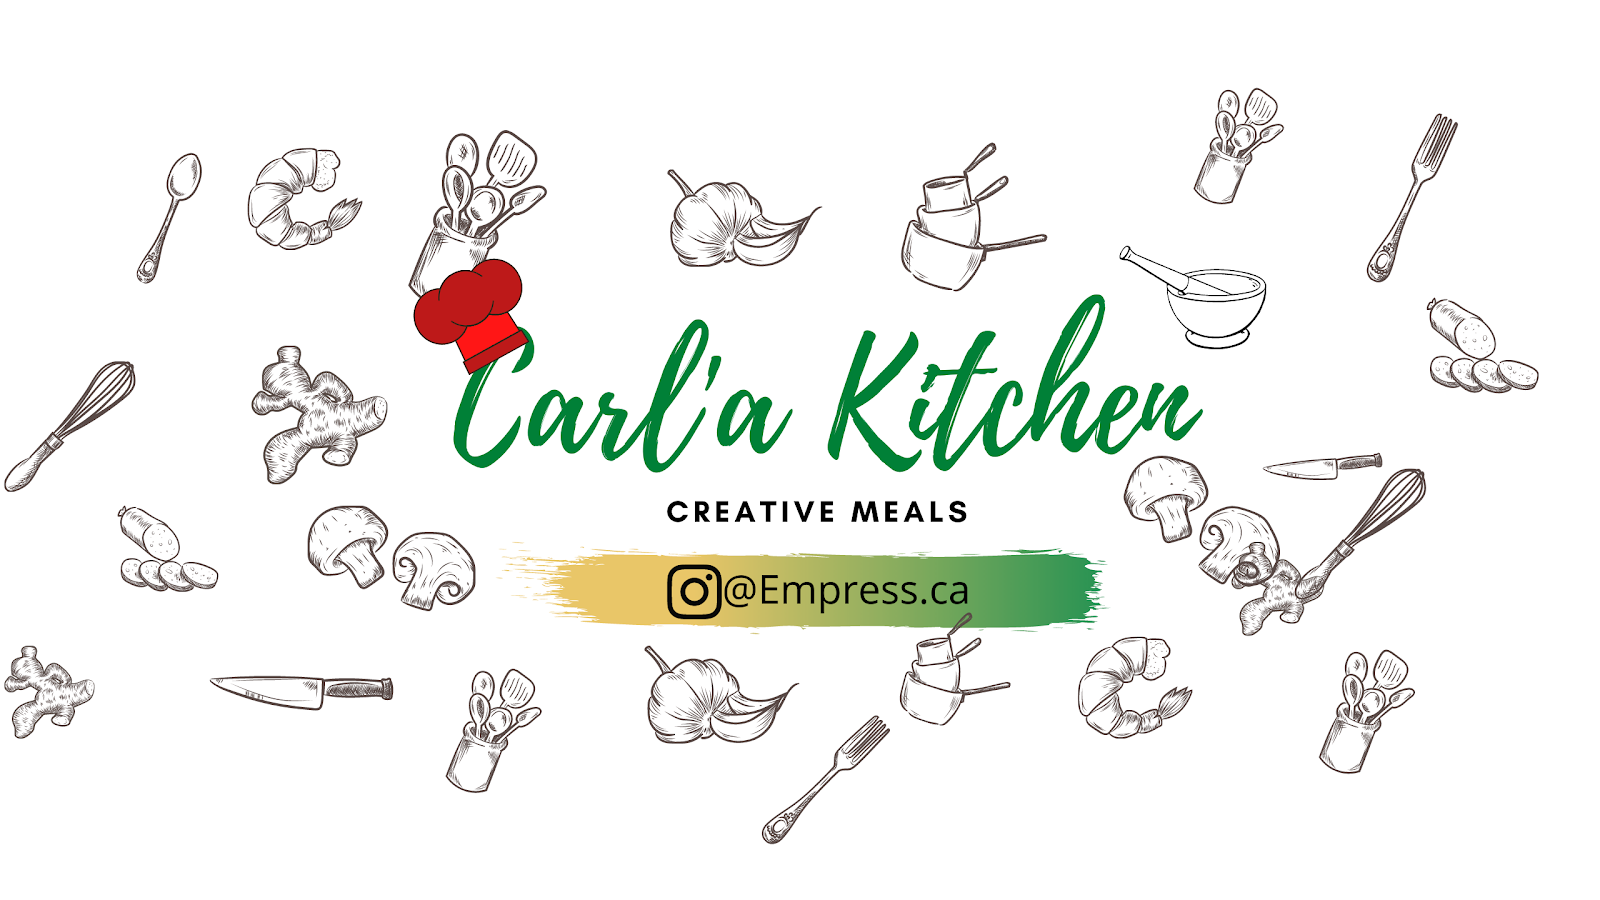 Carl's Kitchen CC